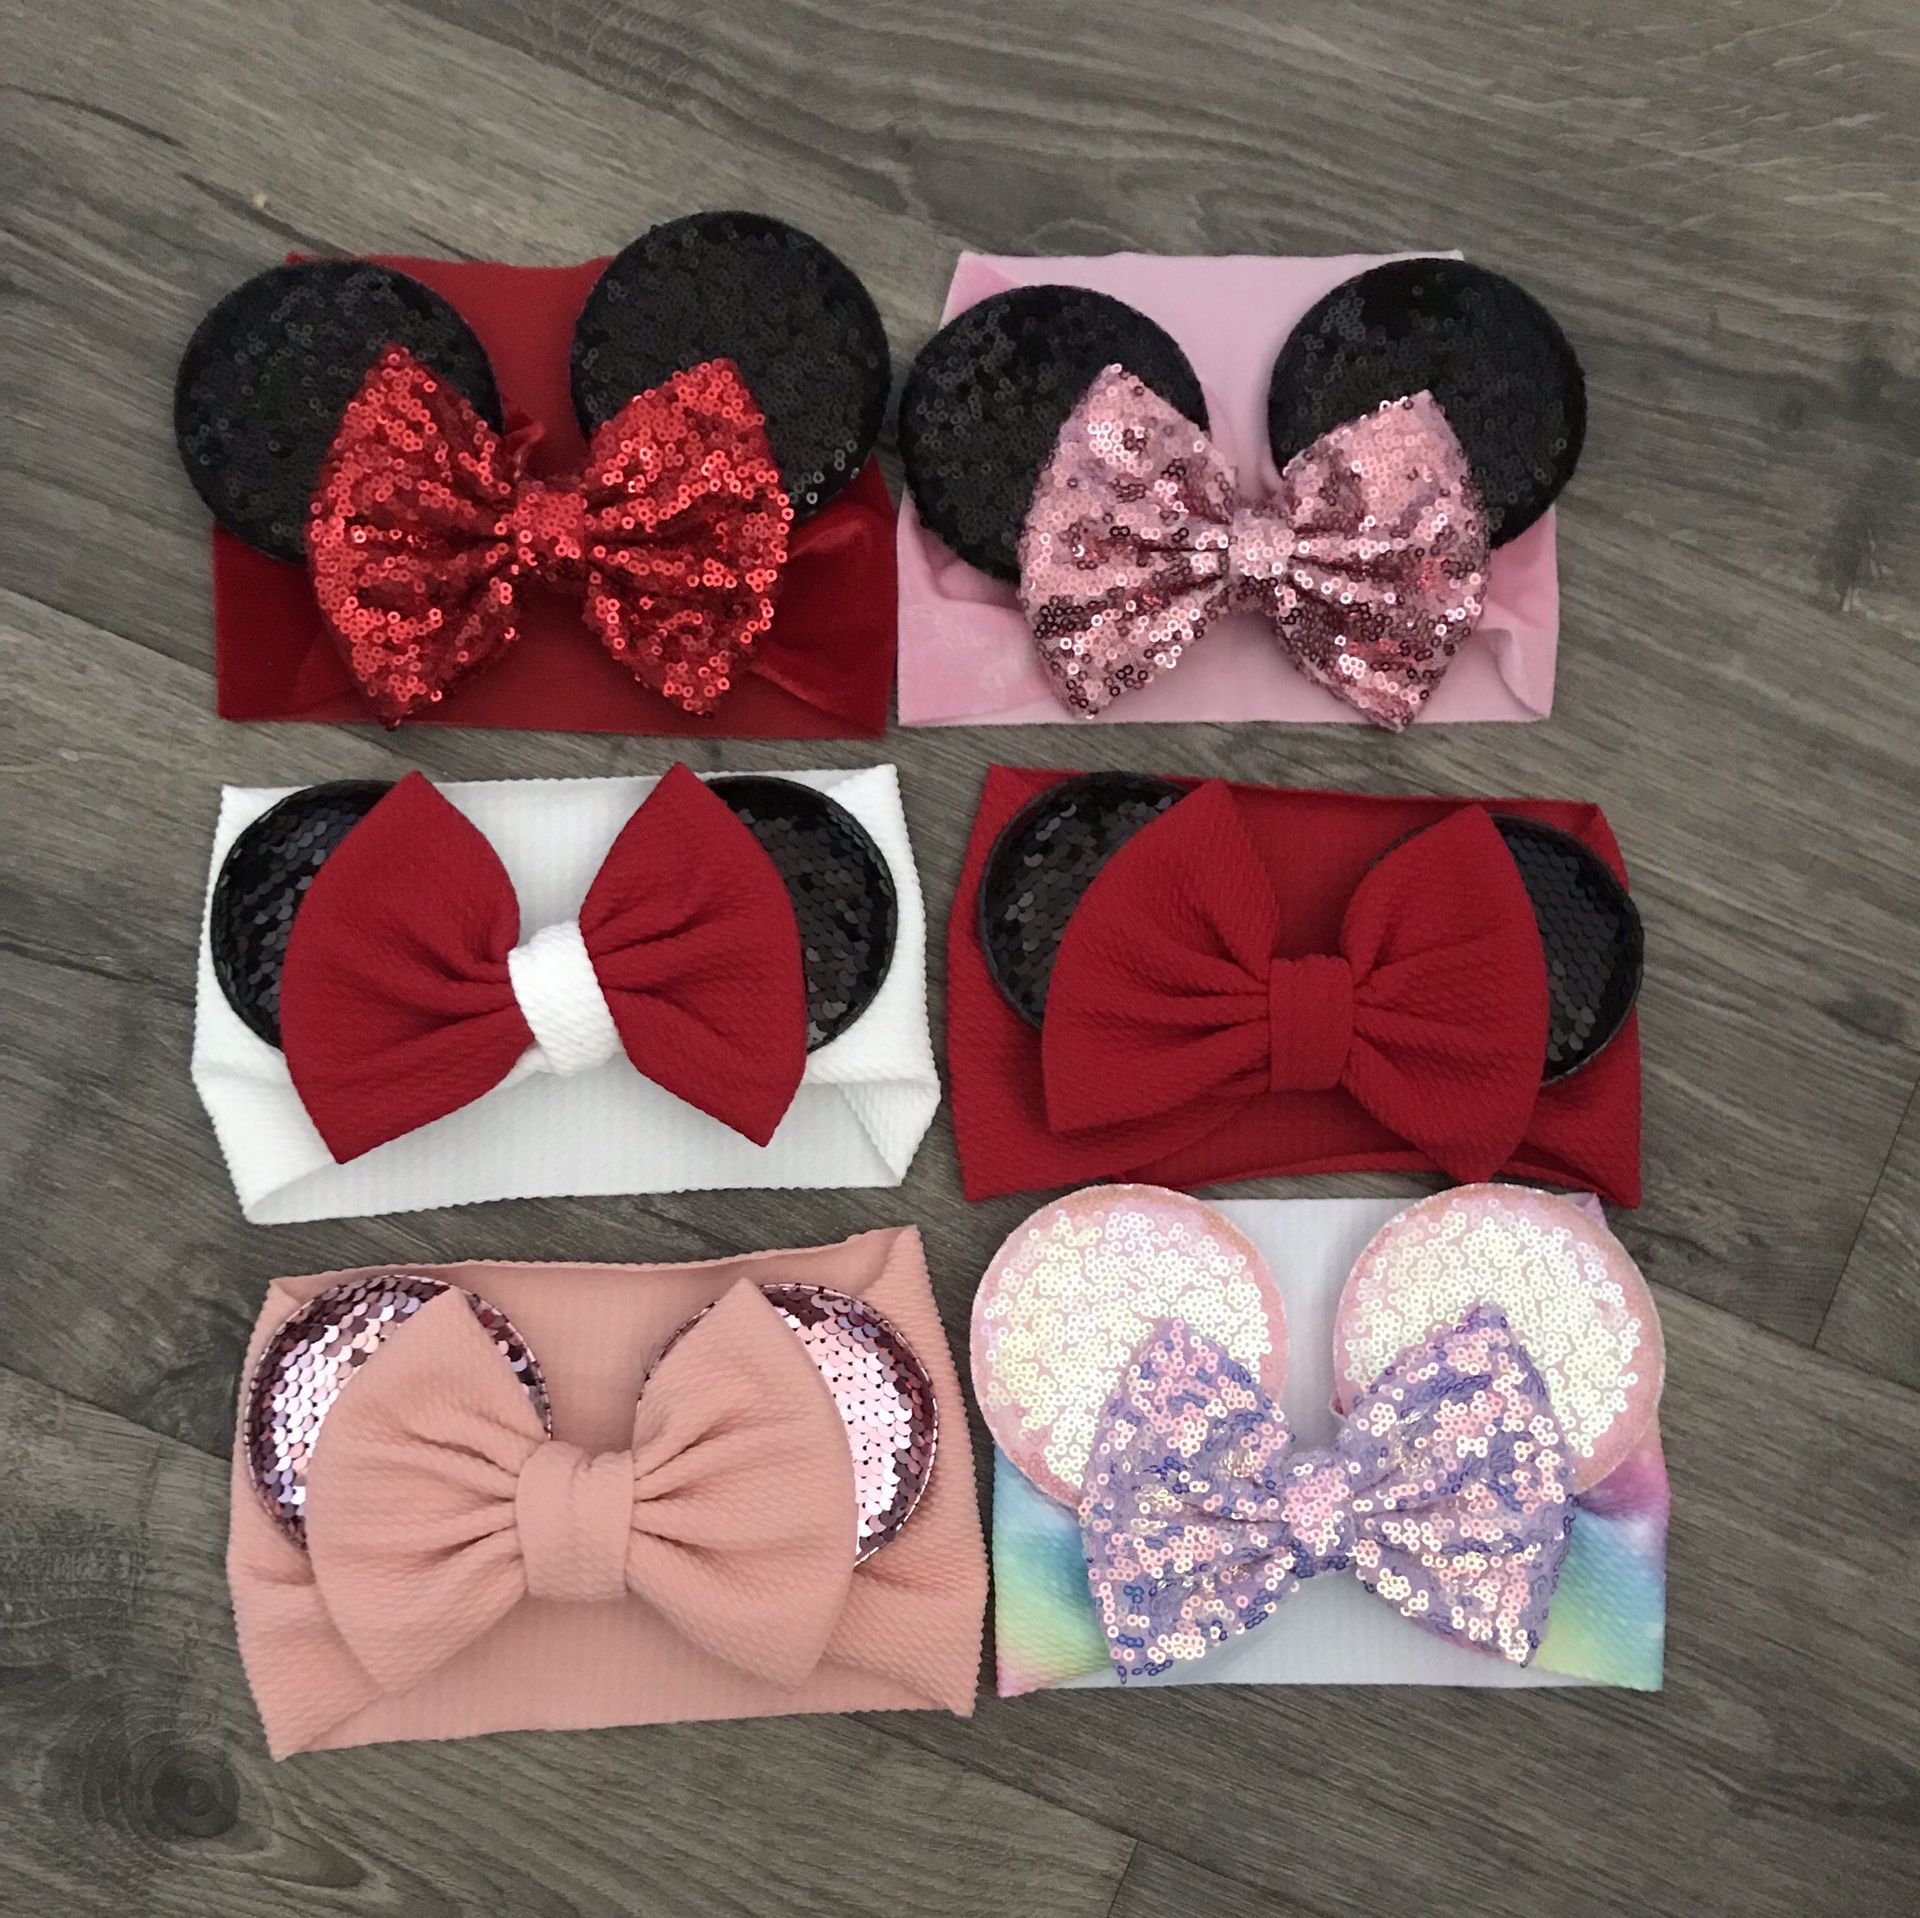 Minnie Mouse ears turbans $10 each